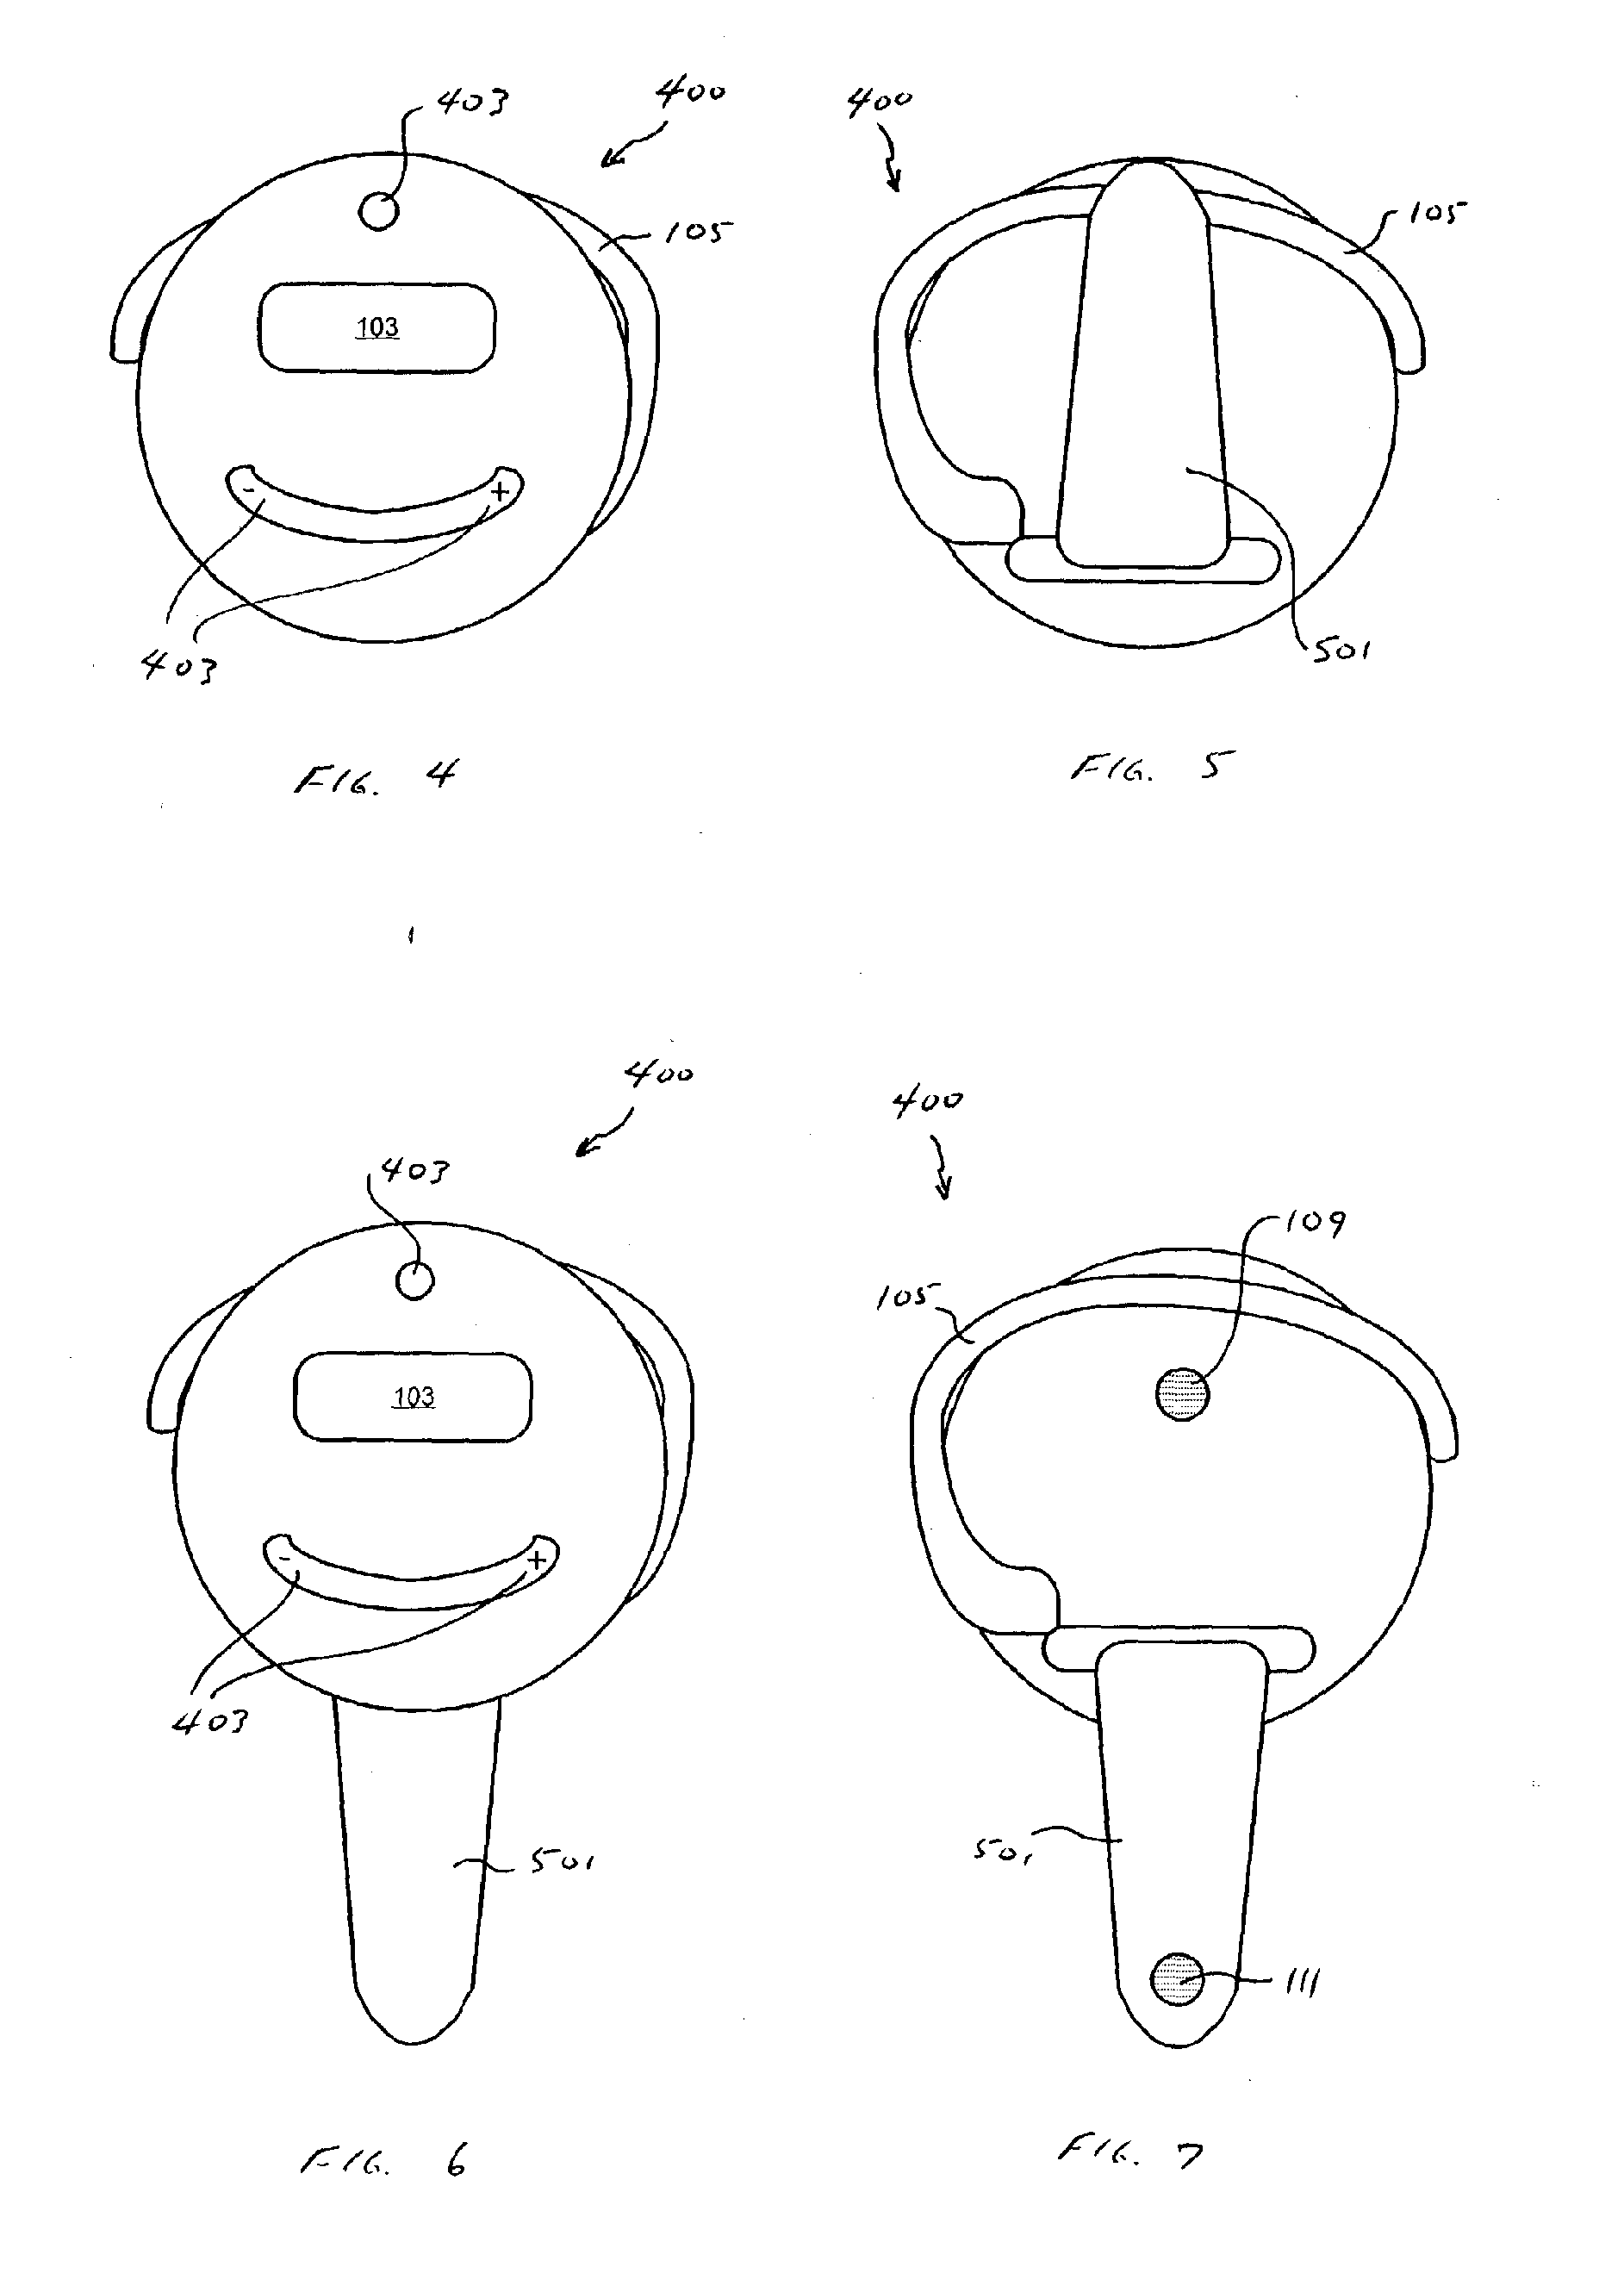 Hearing device